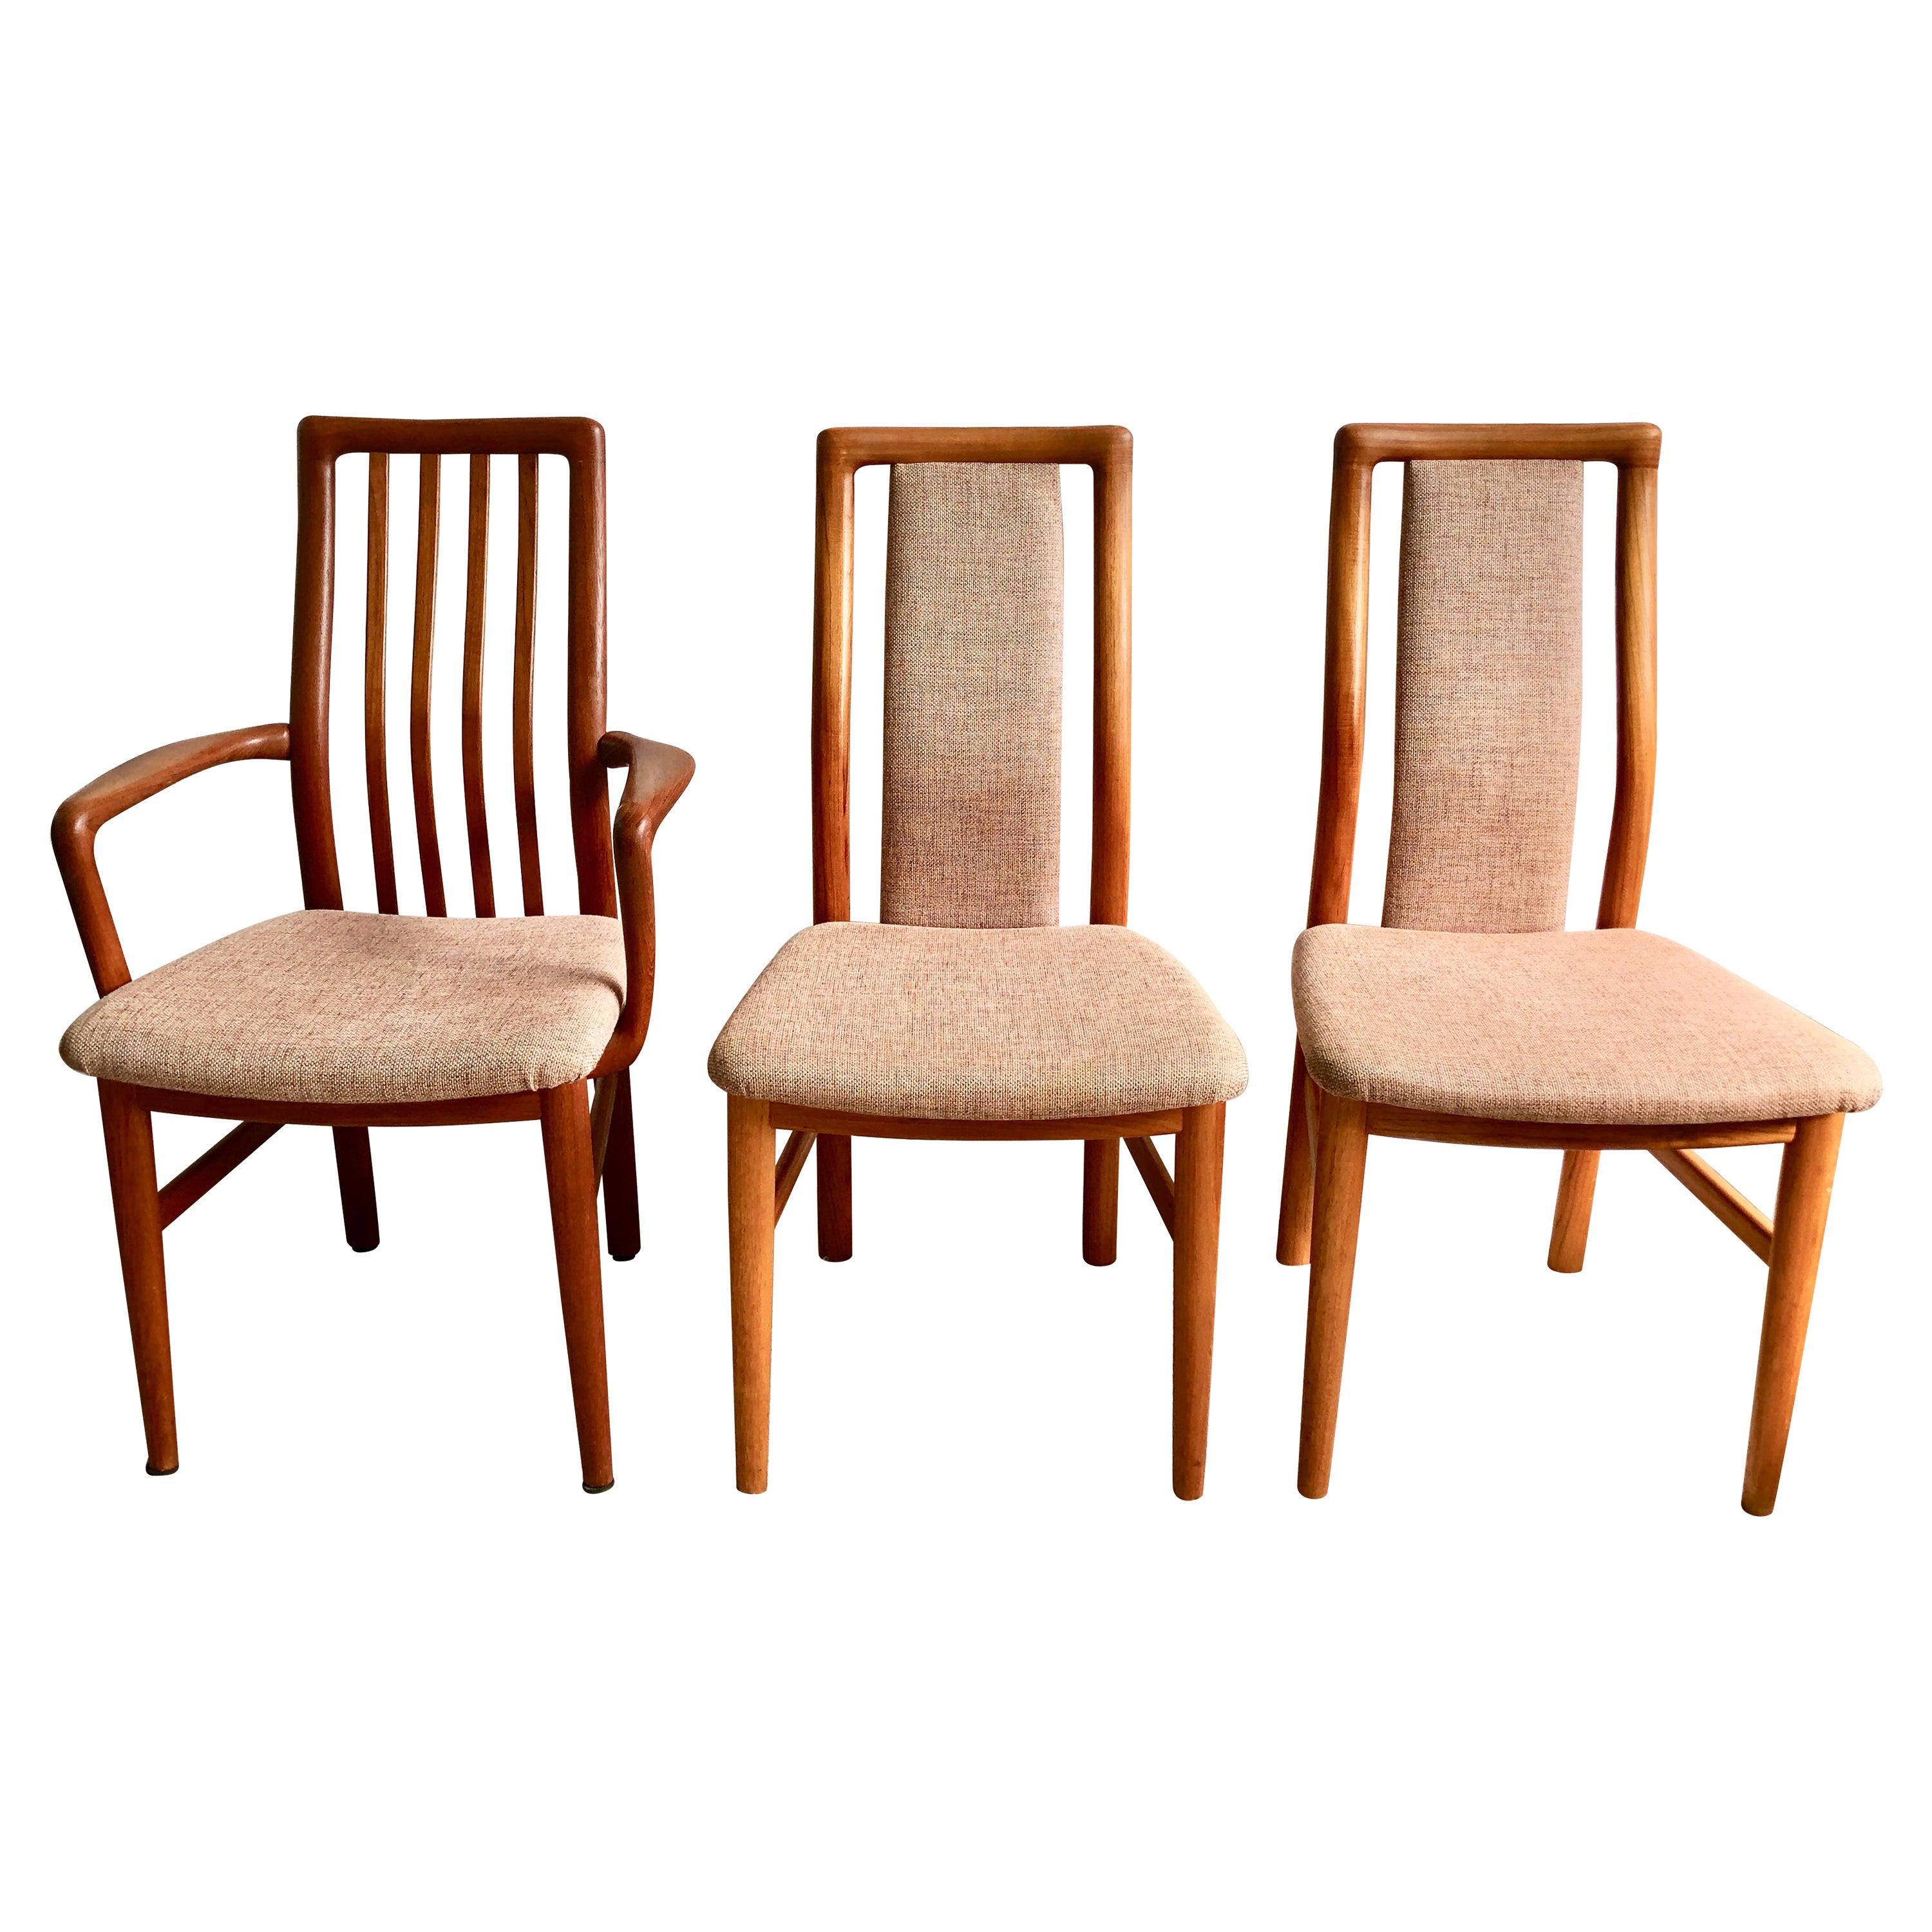 Set of 3 Teak Dining Chairs by Kai Kristiansen Schou Andersen, Denmark, 1970s For Sale